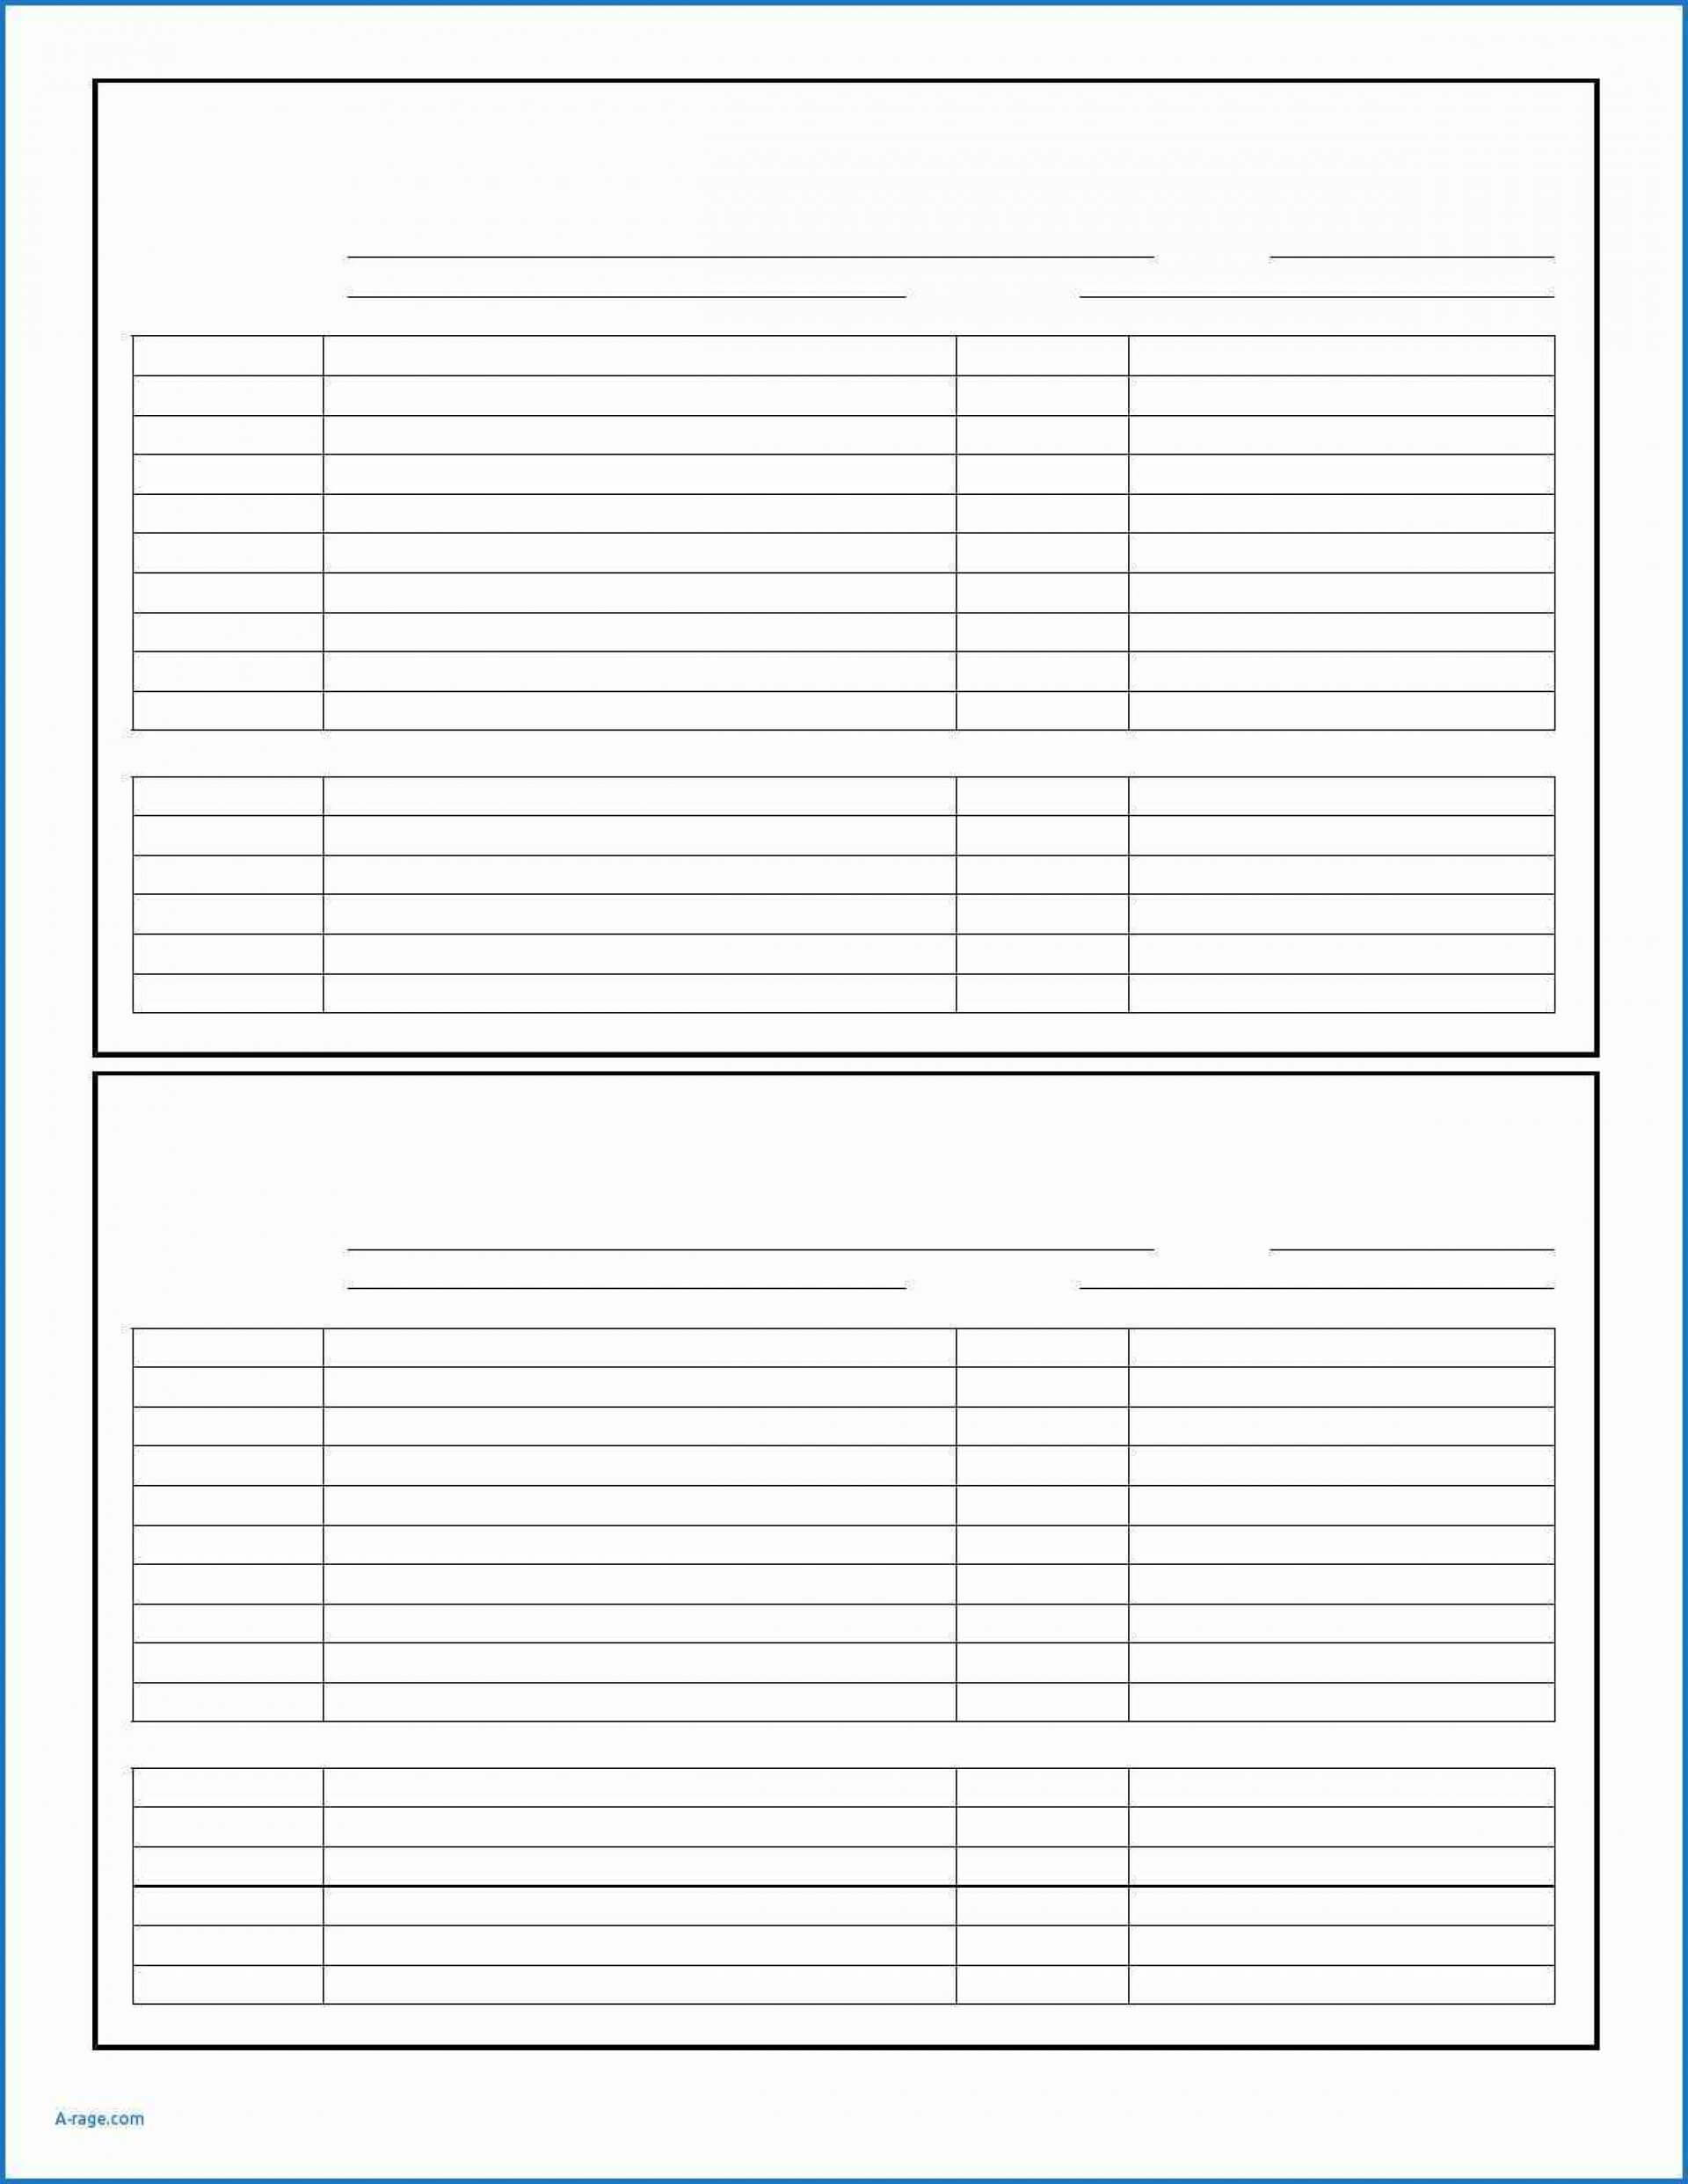 040 Fillable And Fastpitch Softball Lineup Cards Baseball Inside Softball Lineup Card Template